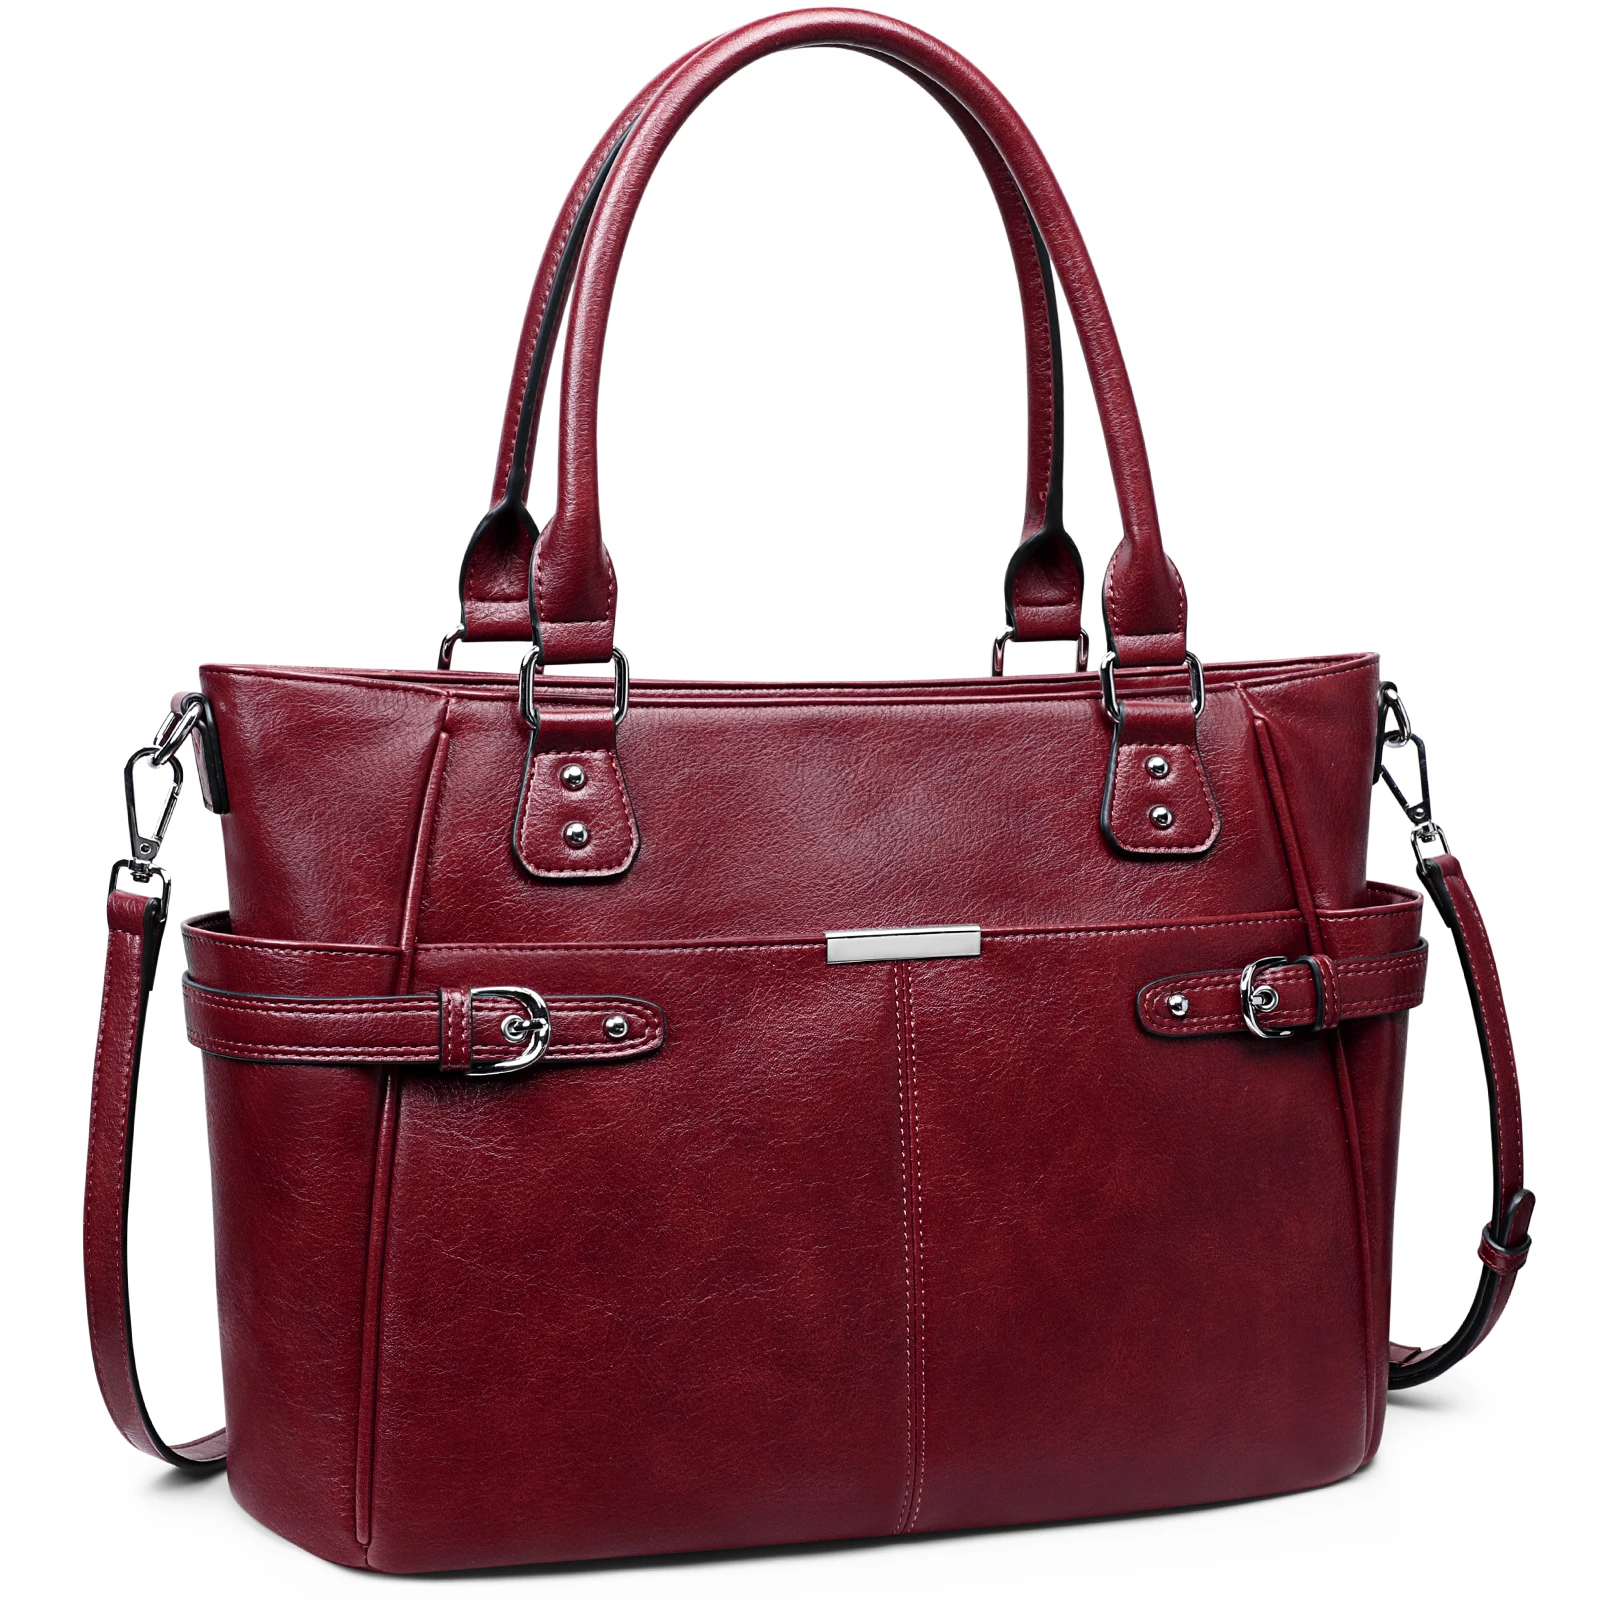 S-ZONE Women Satchel Vegan Leather Shoulder Purse Large Crossbody Top Handle Handbags